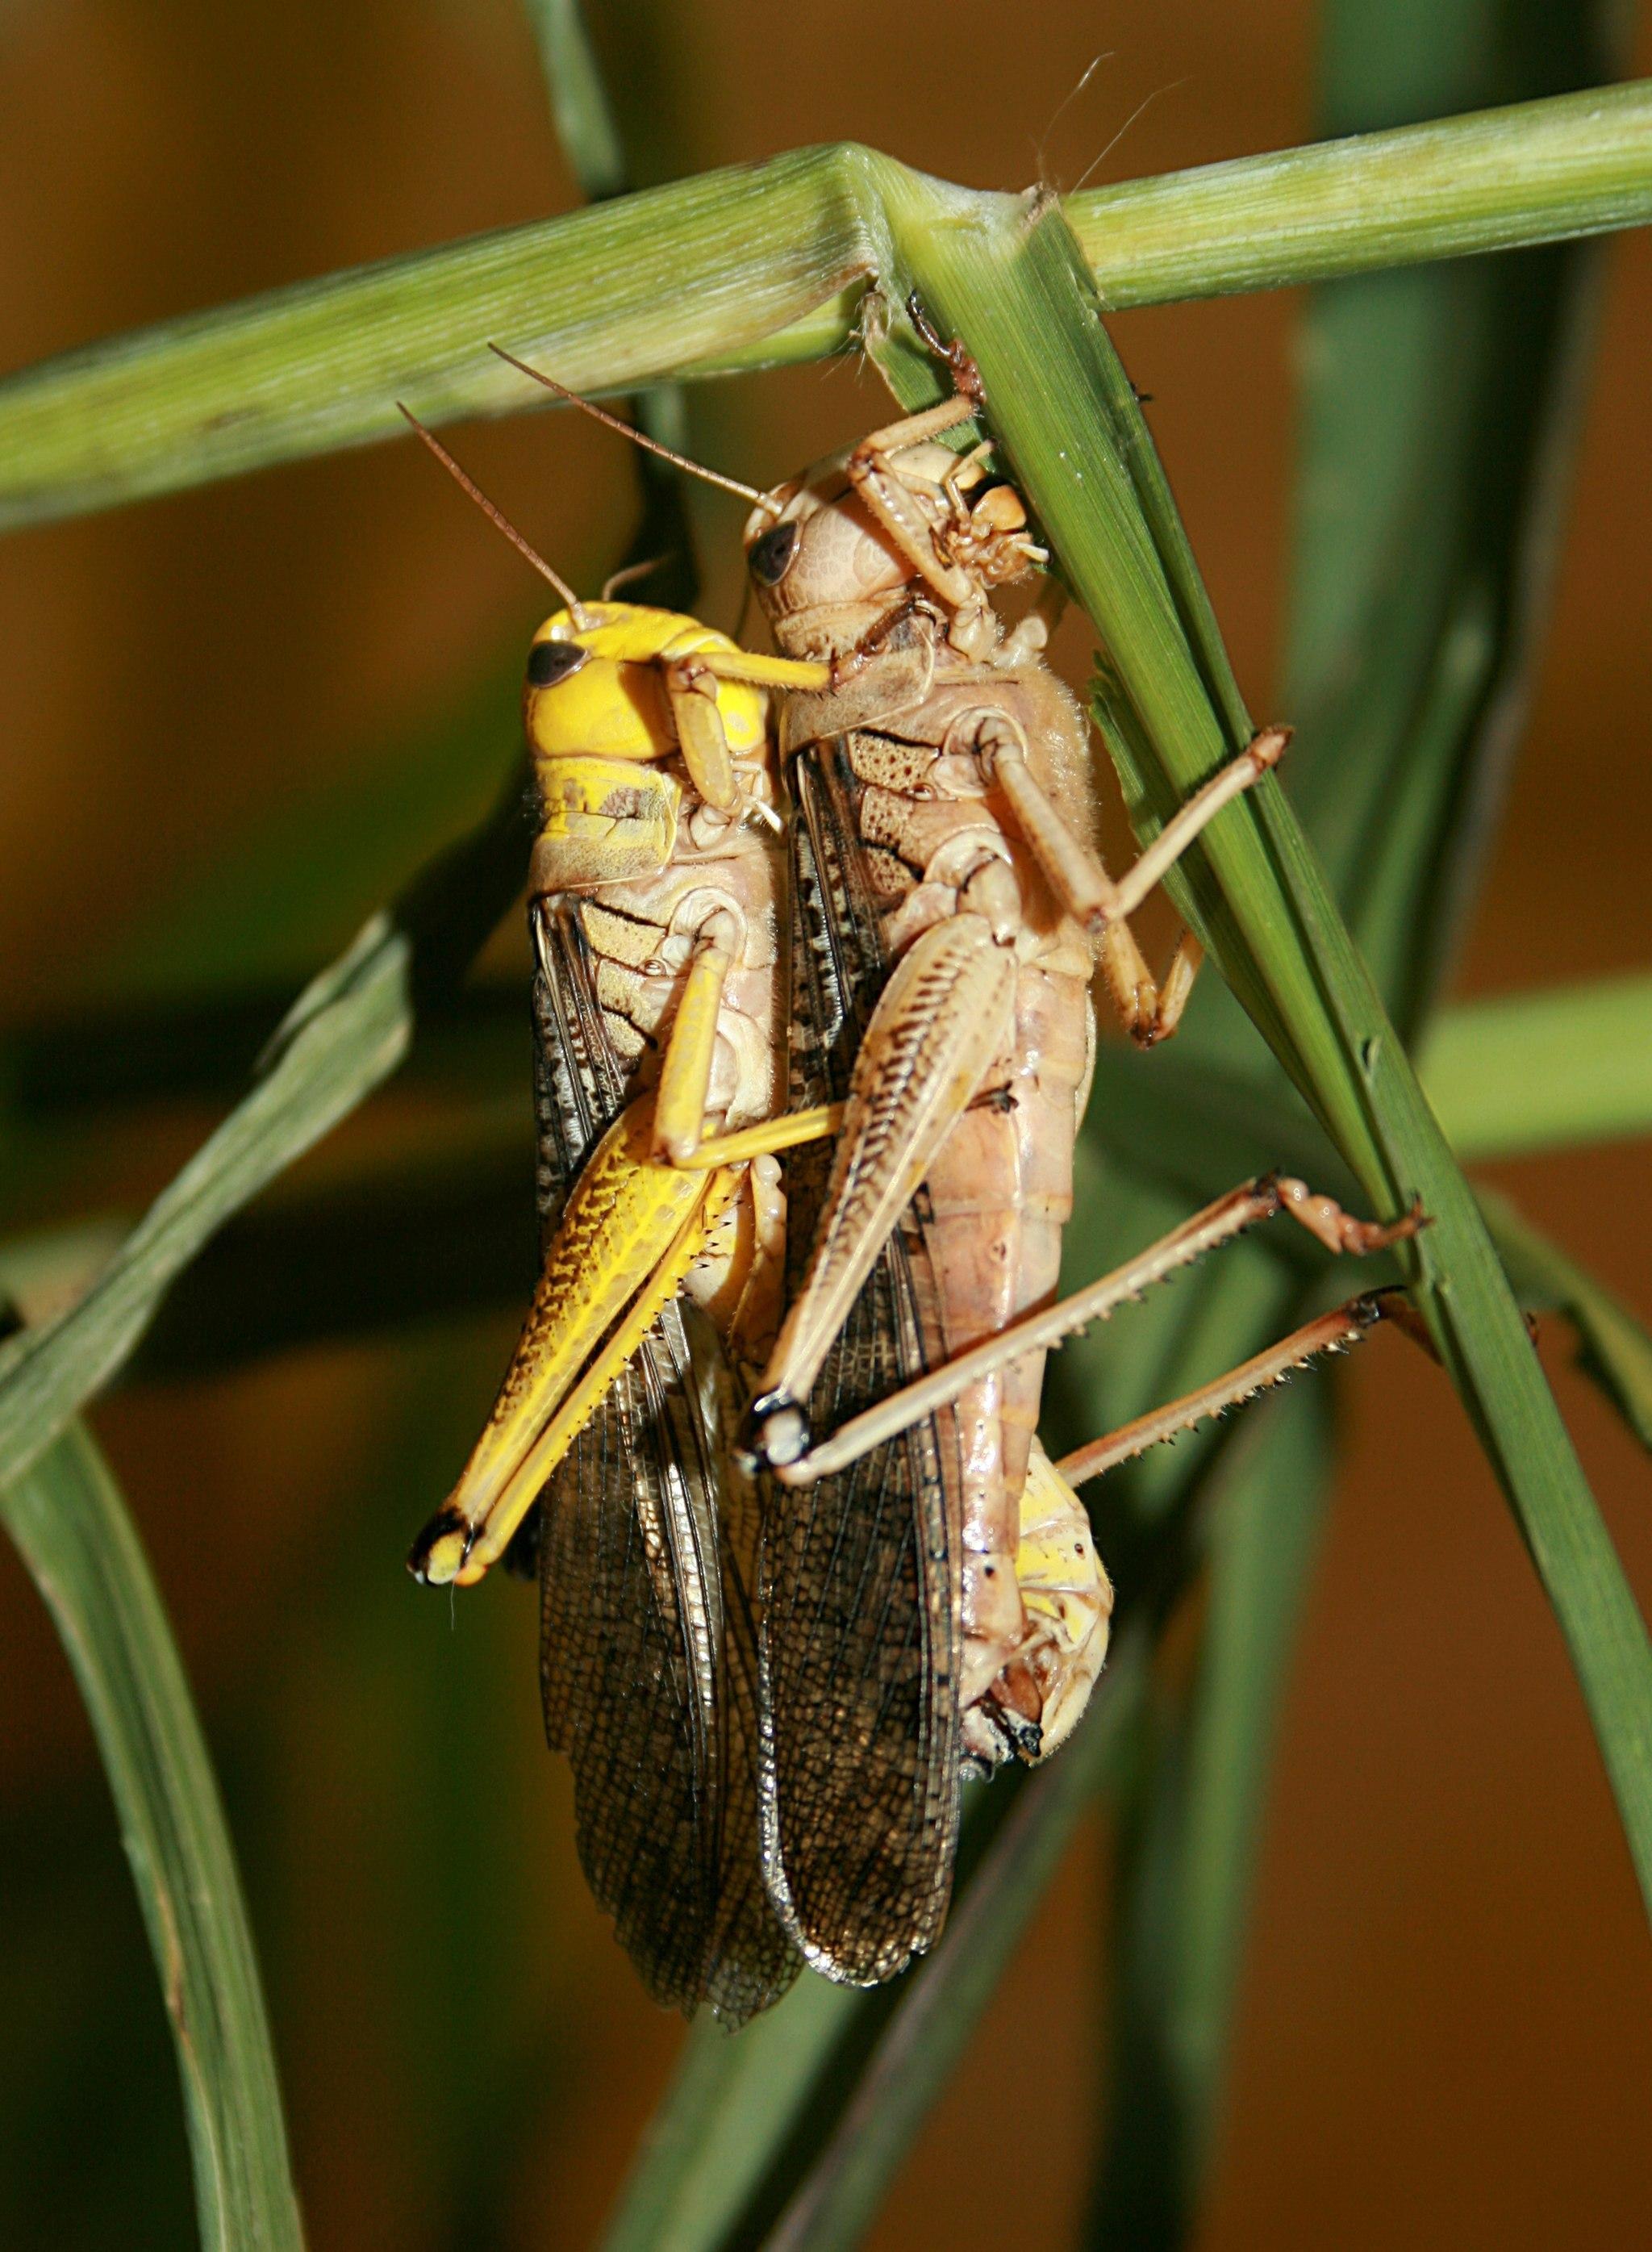 Australian plague locusts